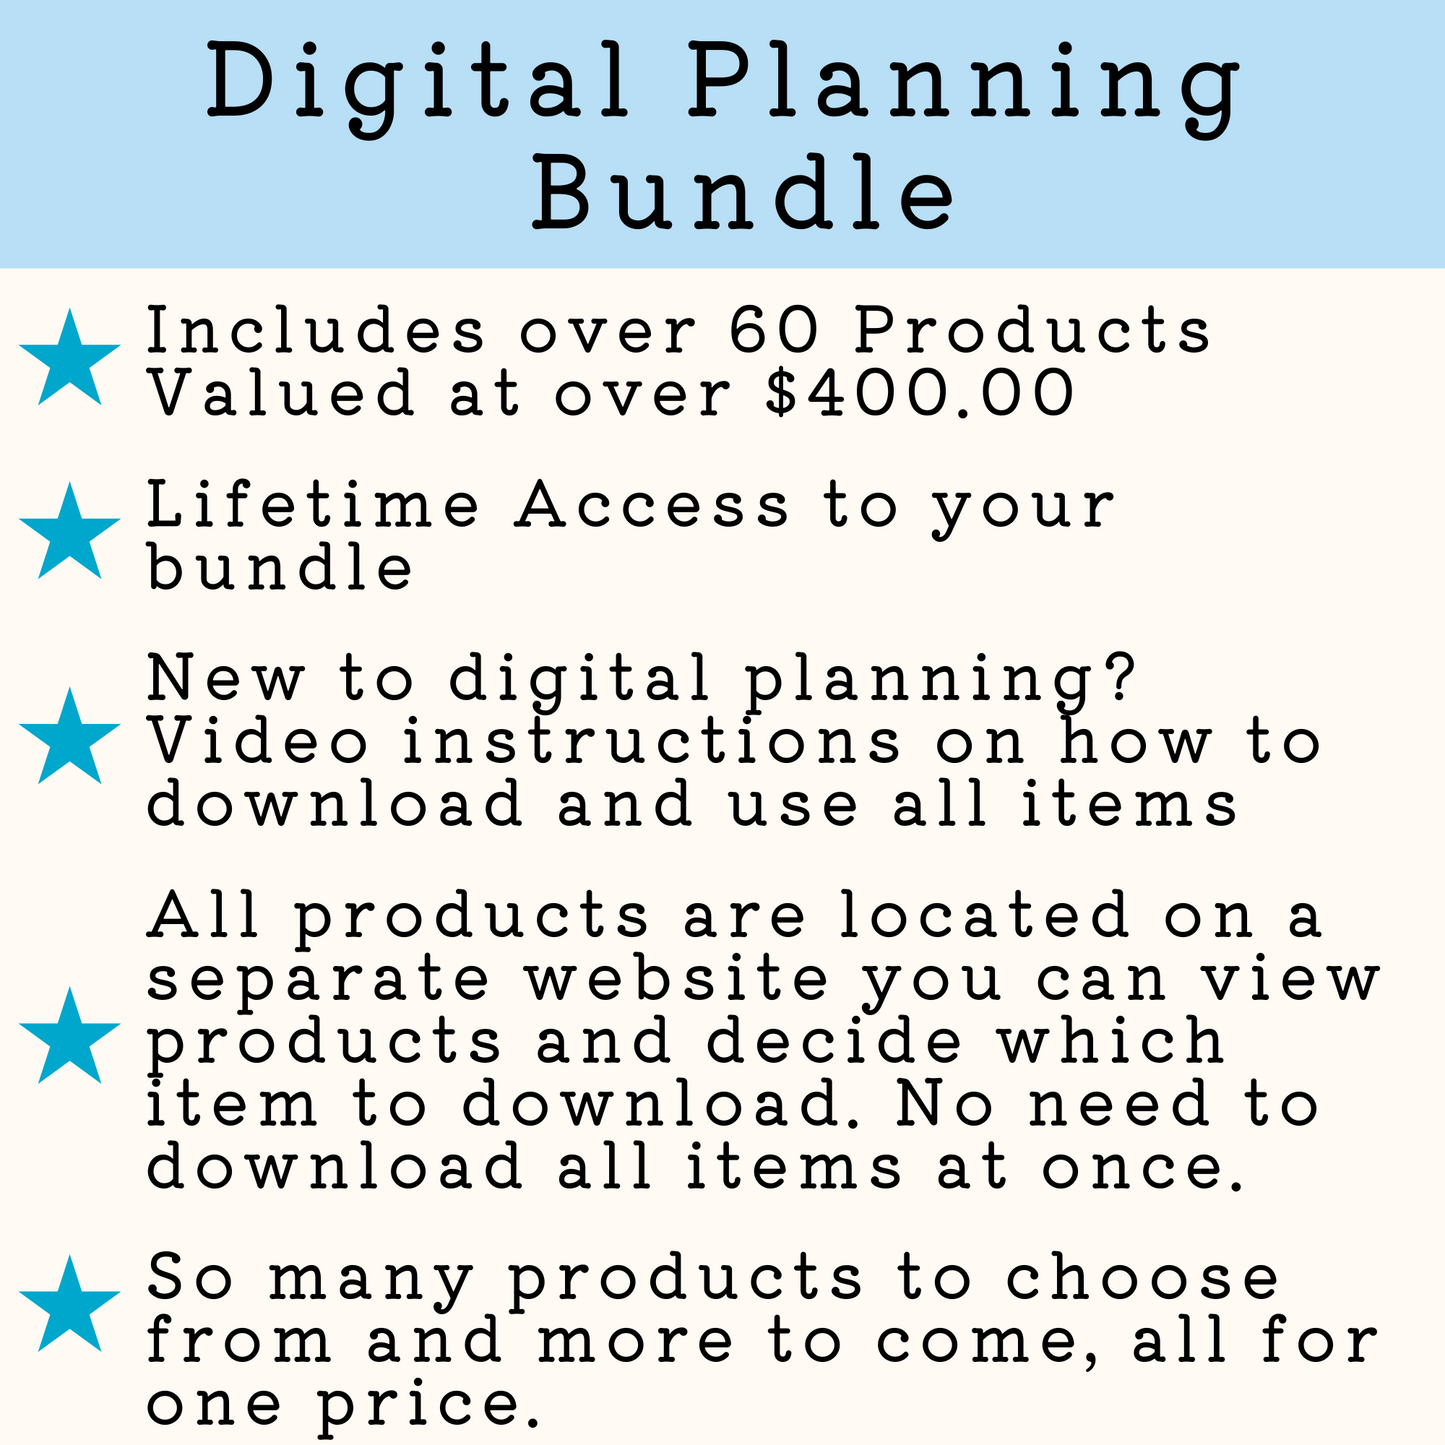 How the digital planning bundle works